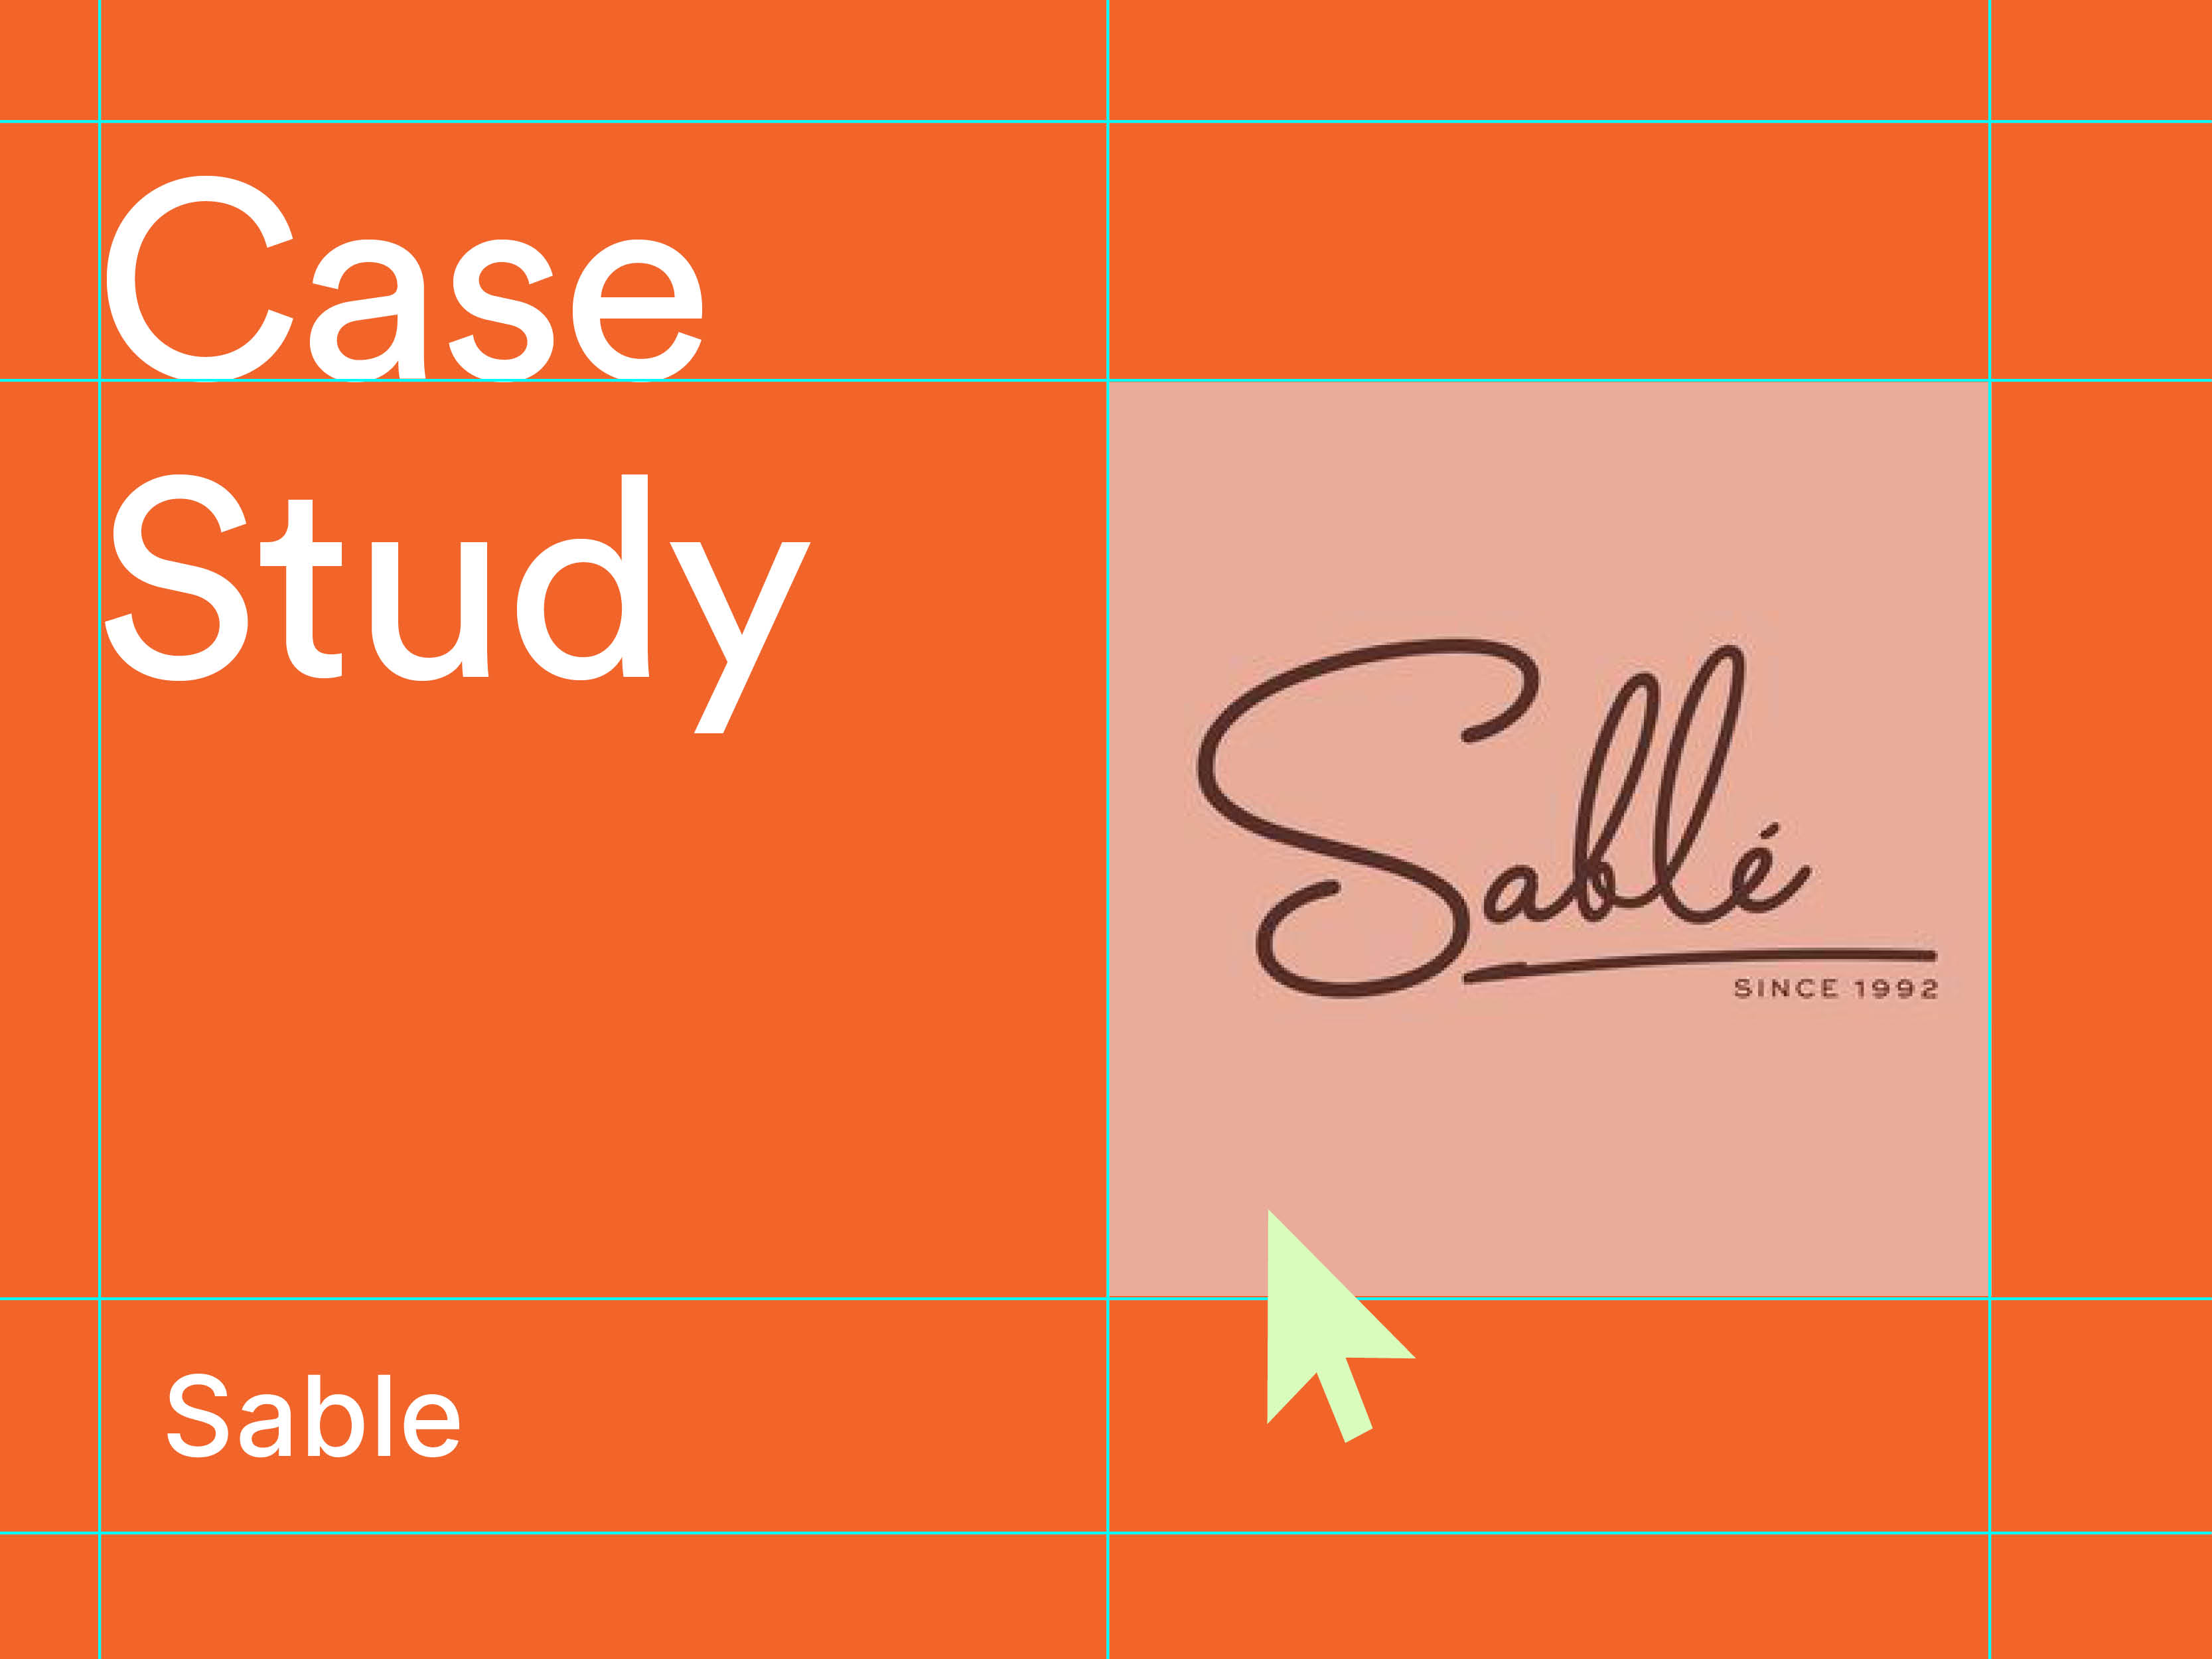 Case Study: Sable